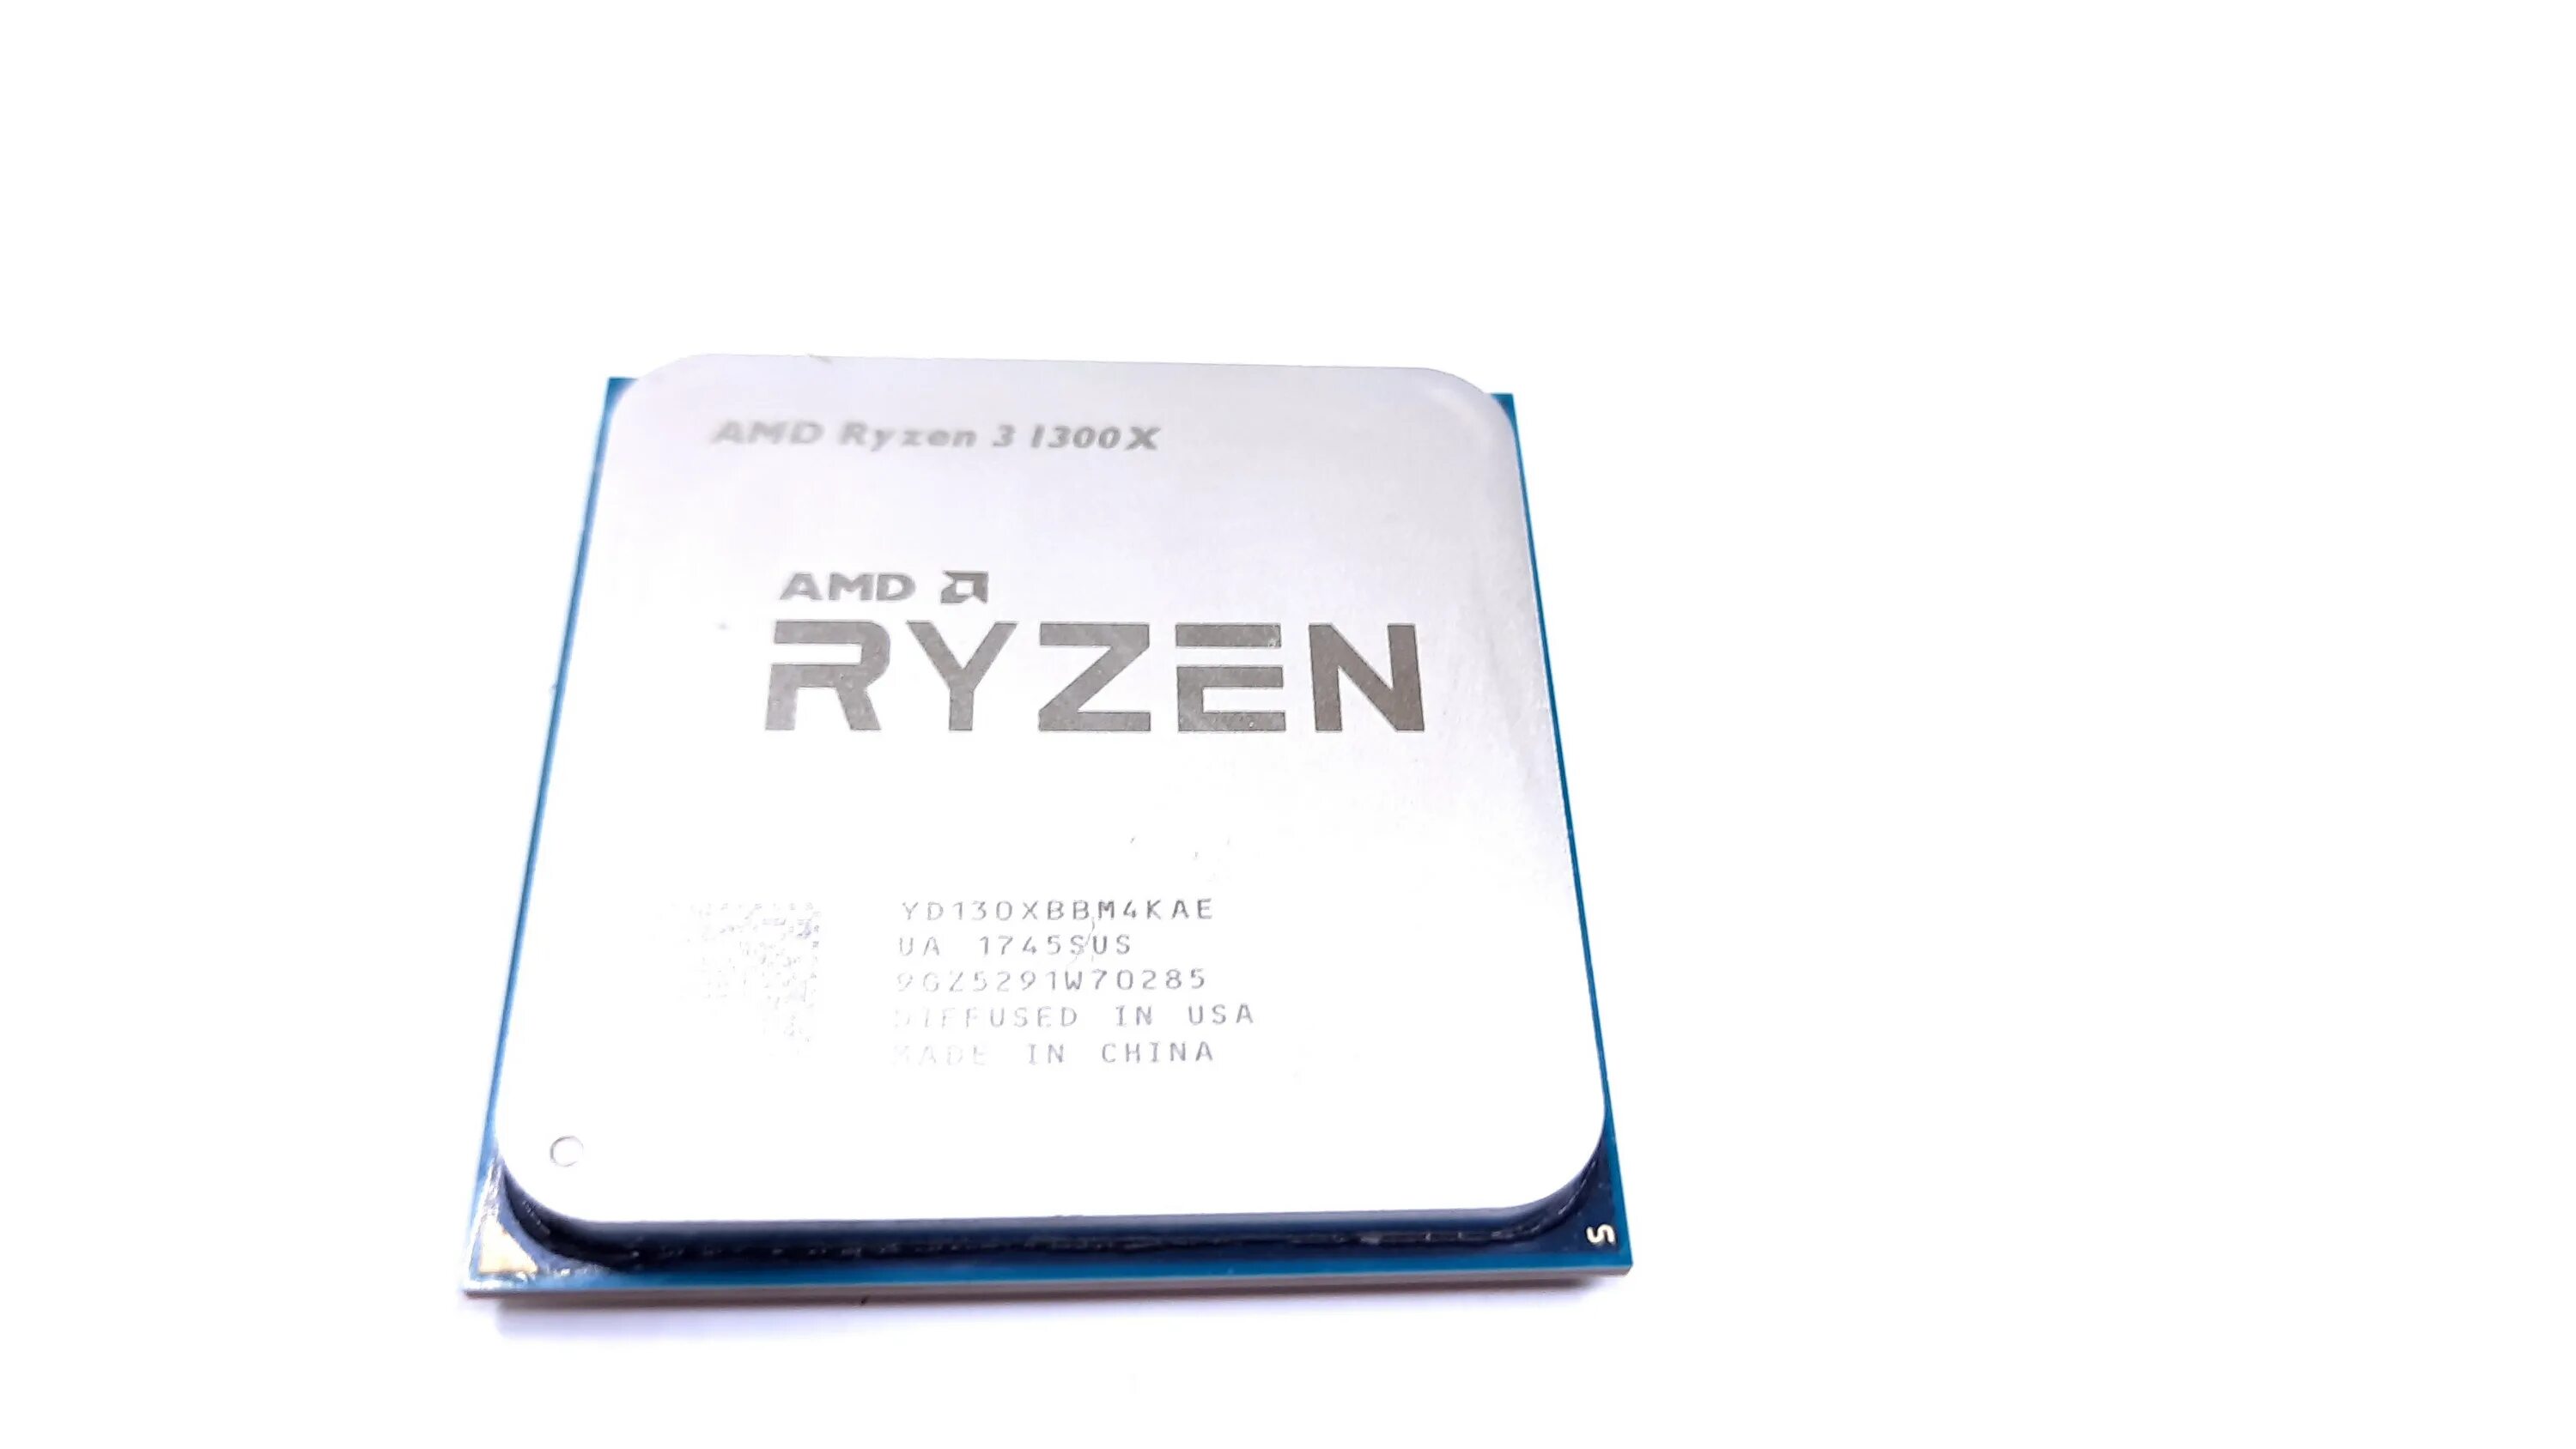 Ryzen 3 pro 1300. Процессор AMD Ryzen 3 1300x am4 Box. AMD Ryzen 3 Pro 1300 Quad-Core Processor 3.50 GHZ. Summit Ridge процессоры. Ryzen 3 1300x купить.